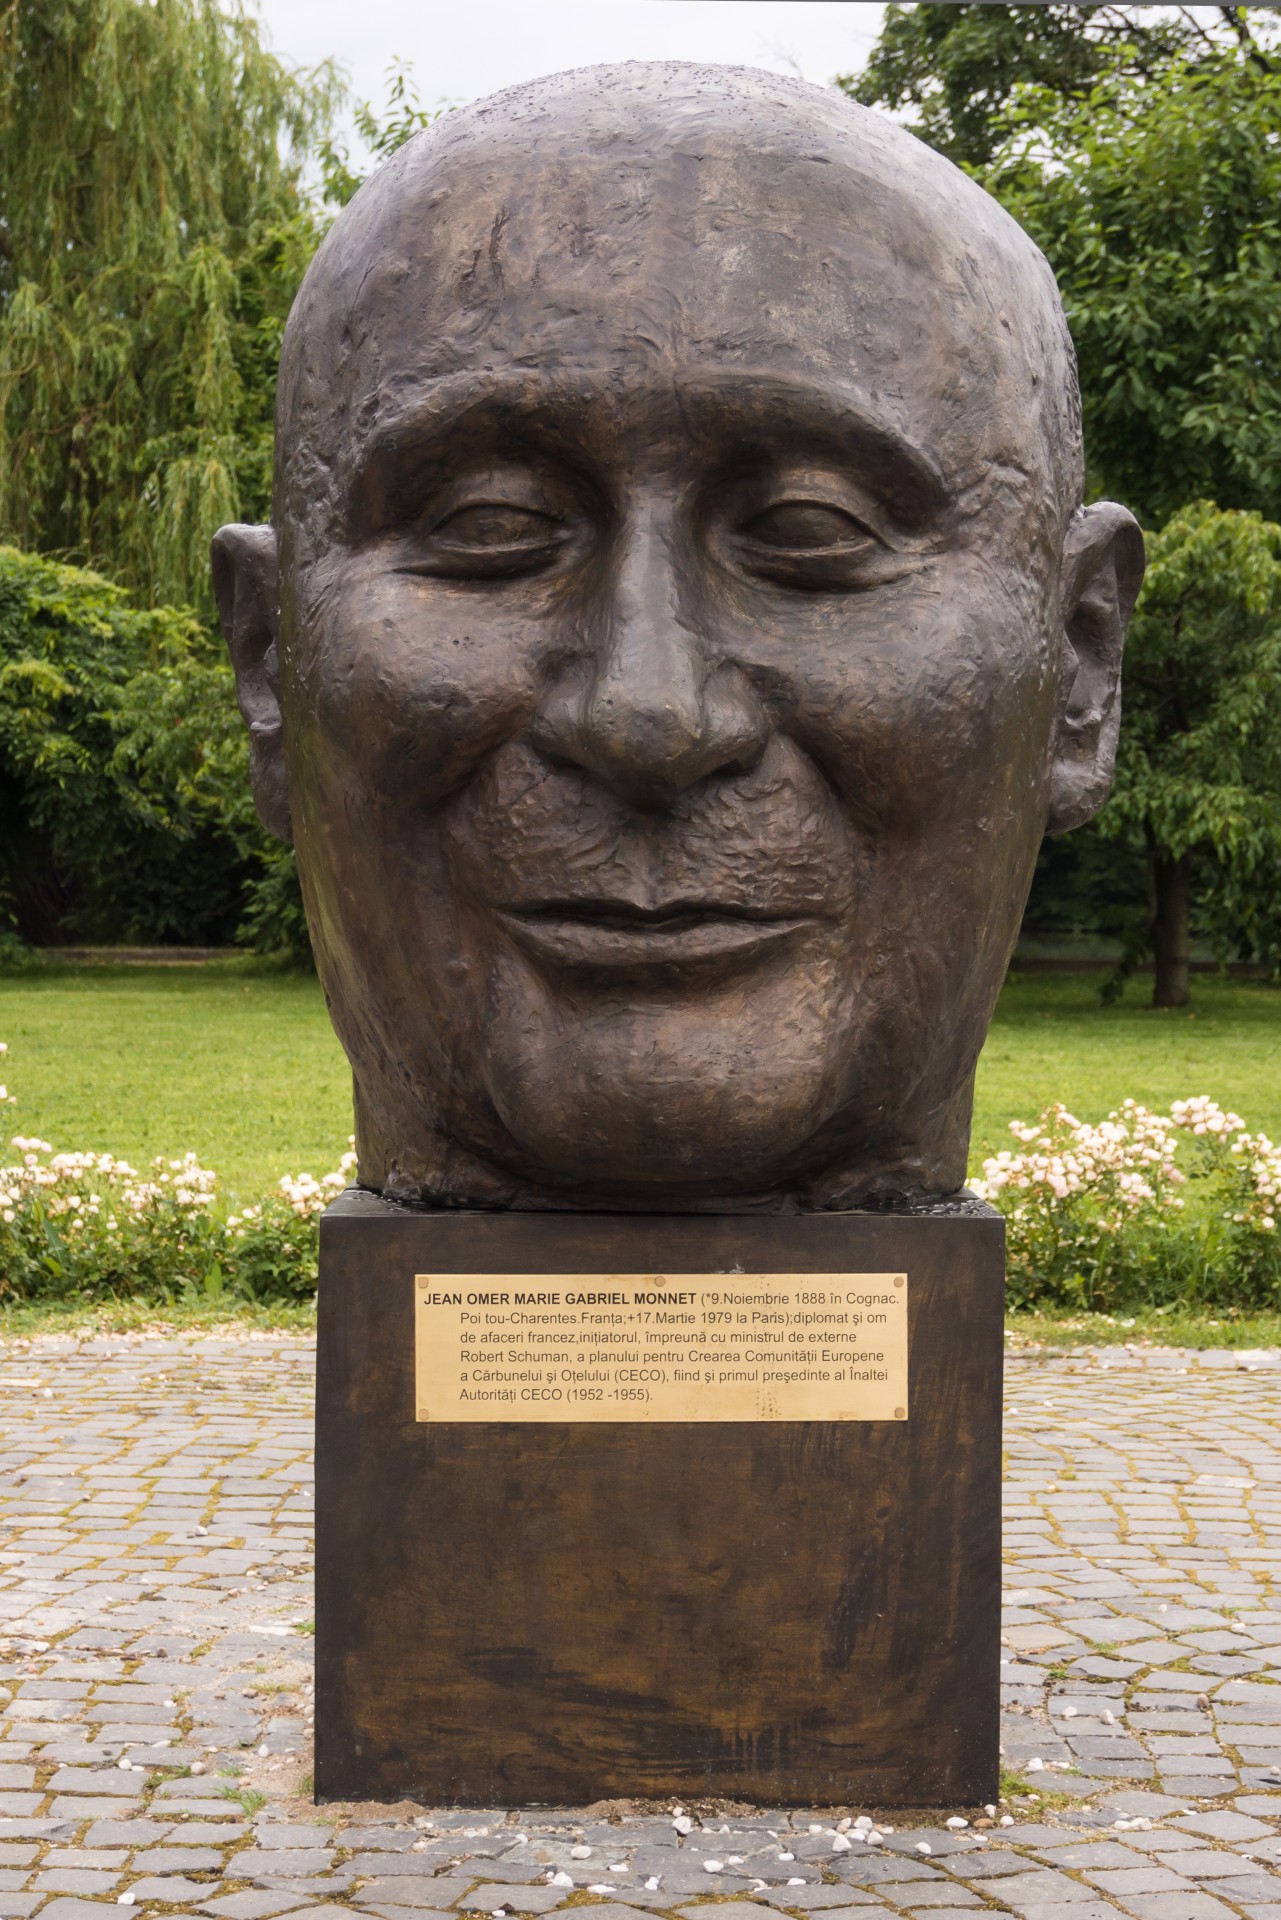 Jean Monnet (1888-1979)